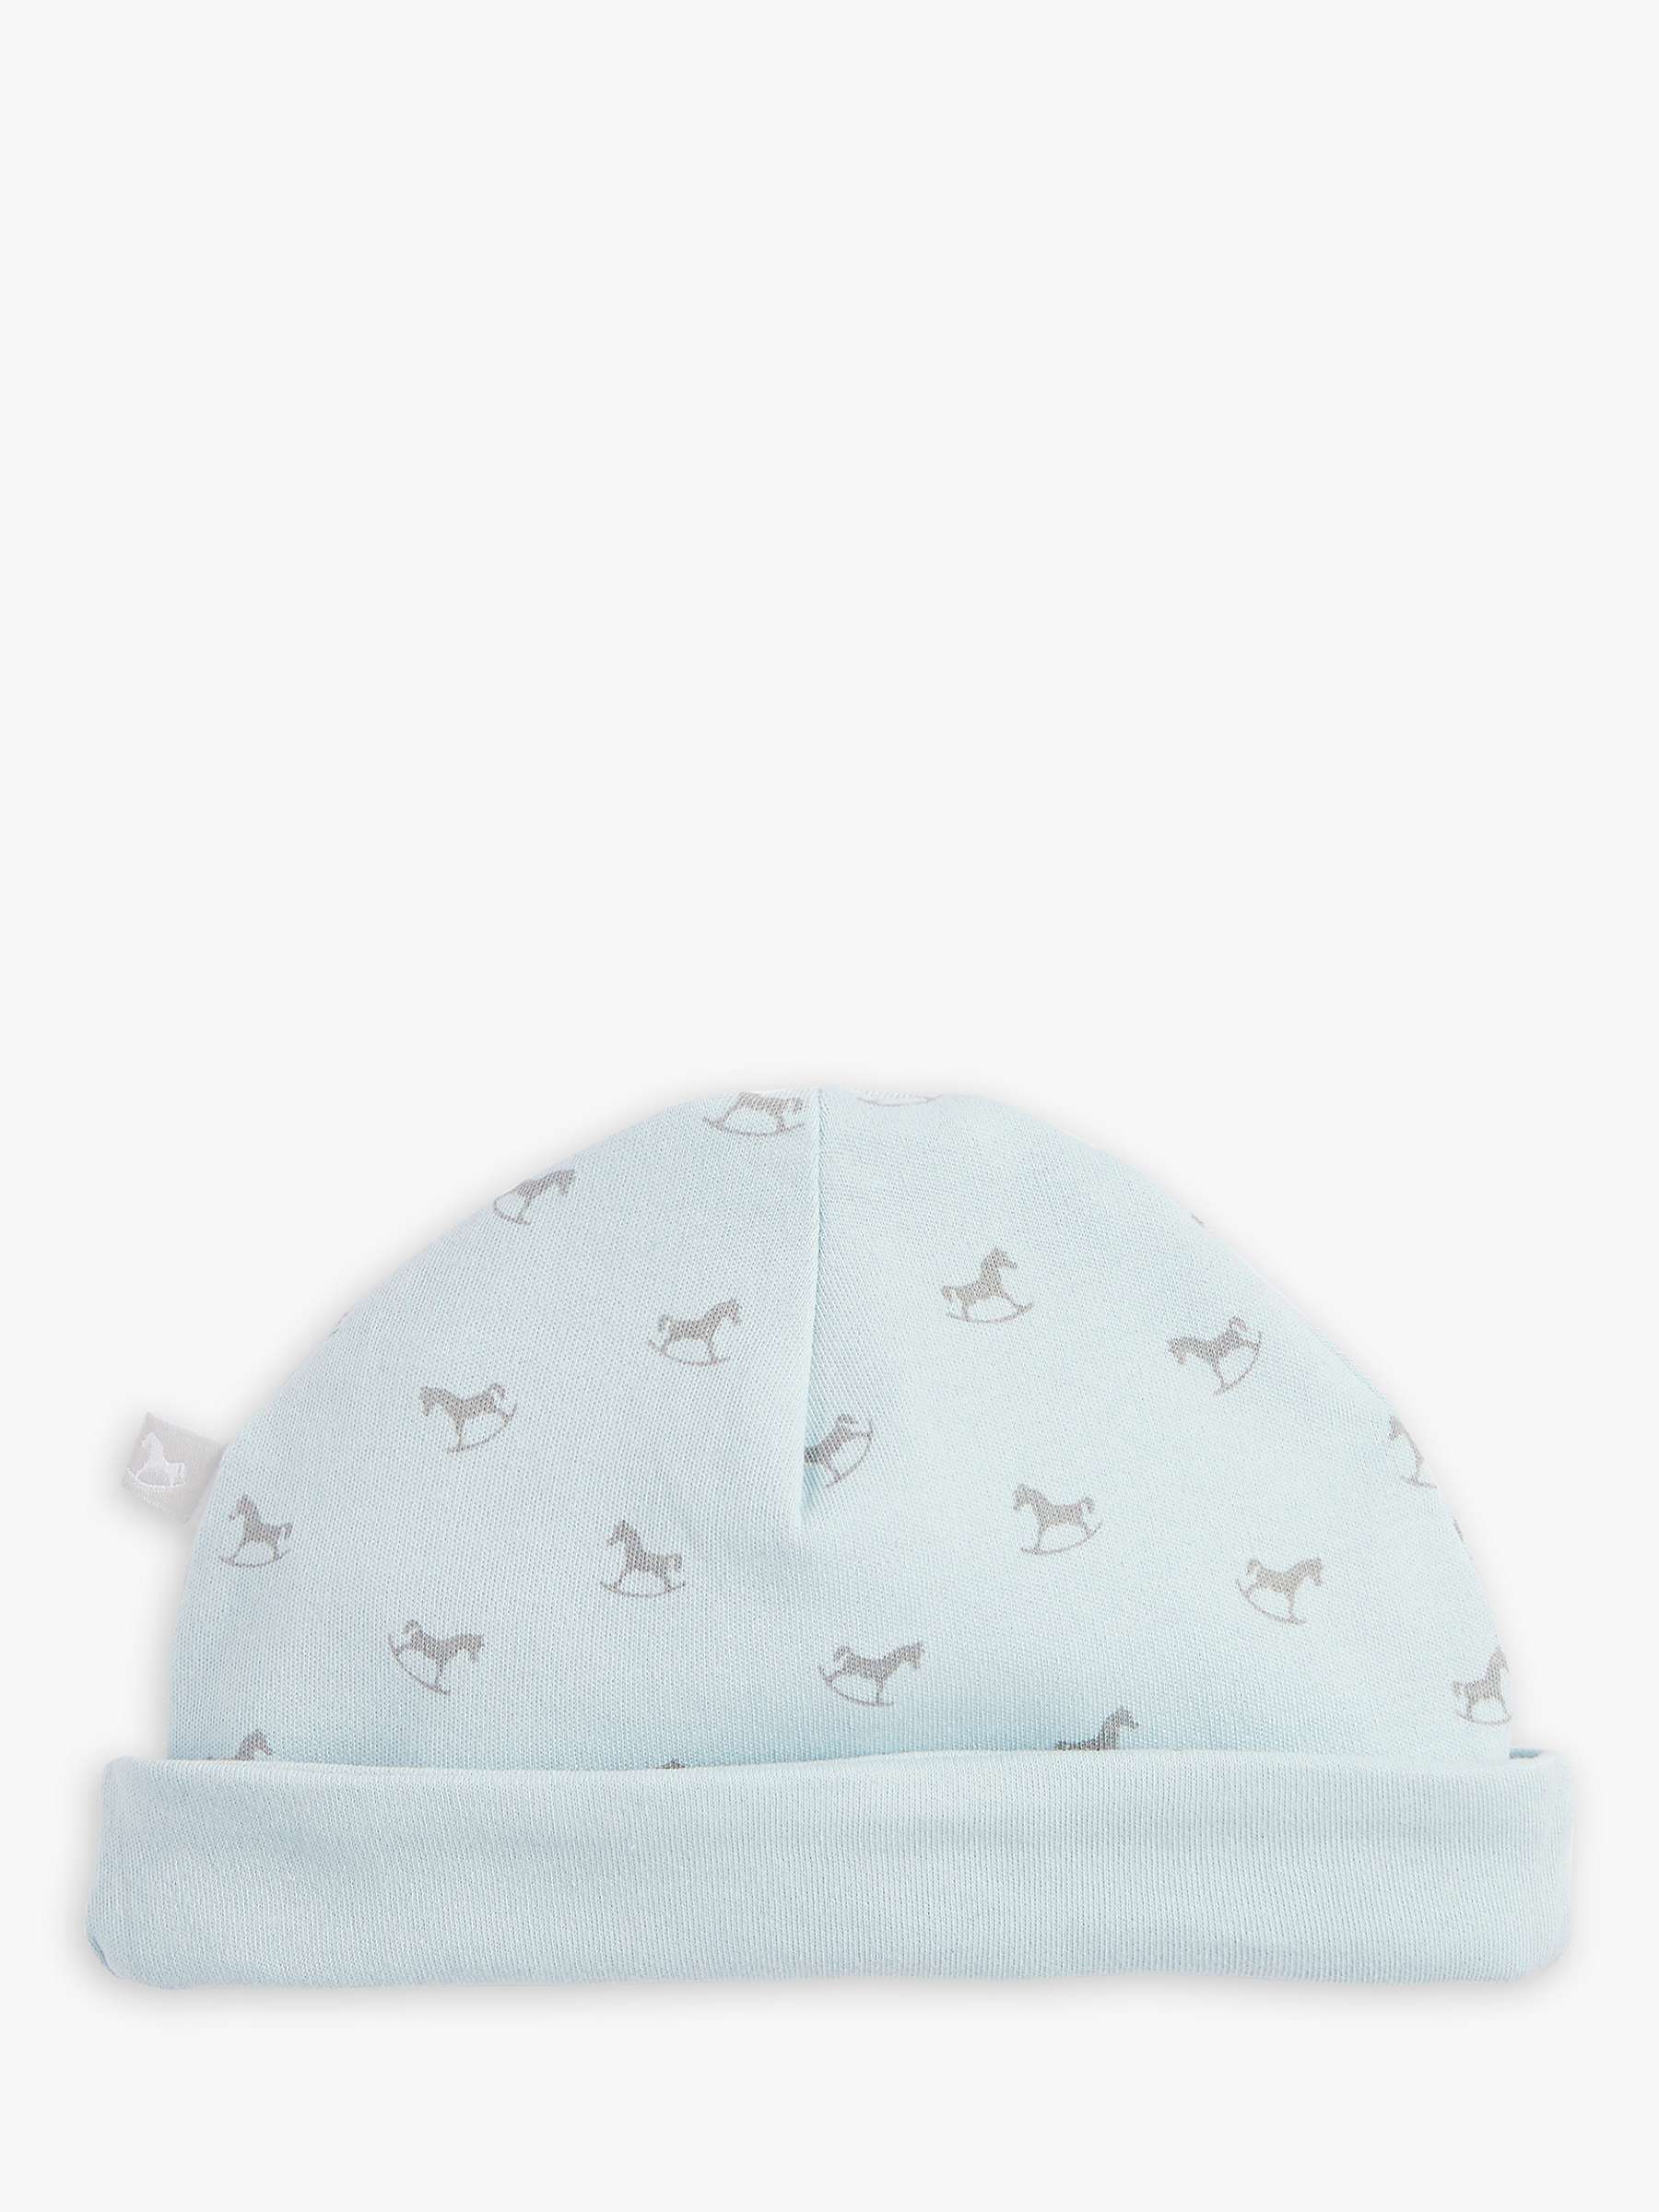 Buy The Little Tailor Baby Super Soft Jersey Sleepsuit, Hat, Blanket, Comforter And Booties Set Online at johnlewis.com